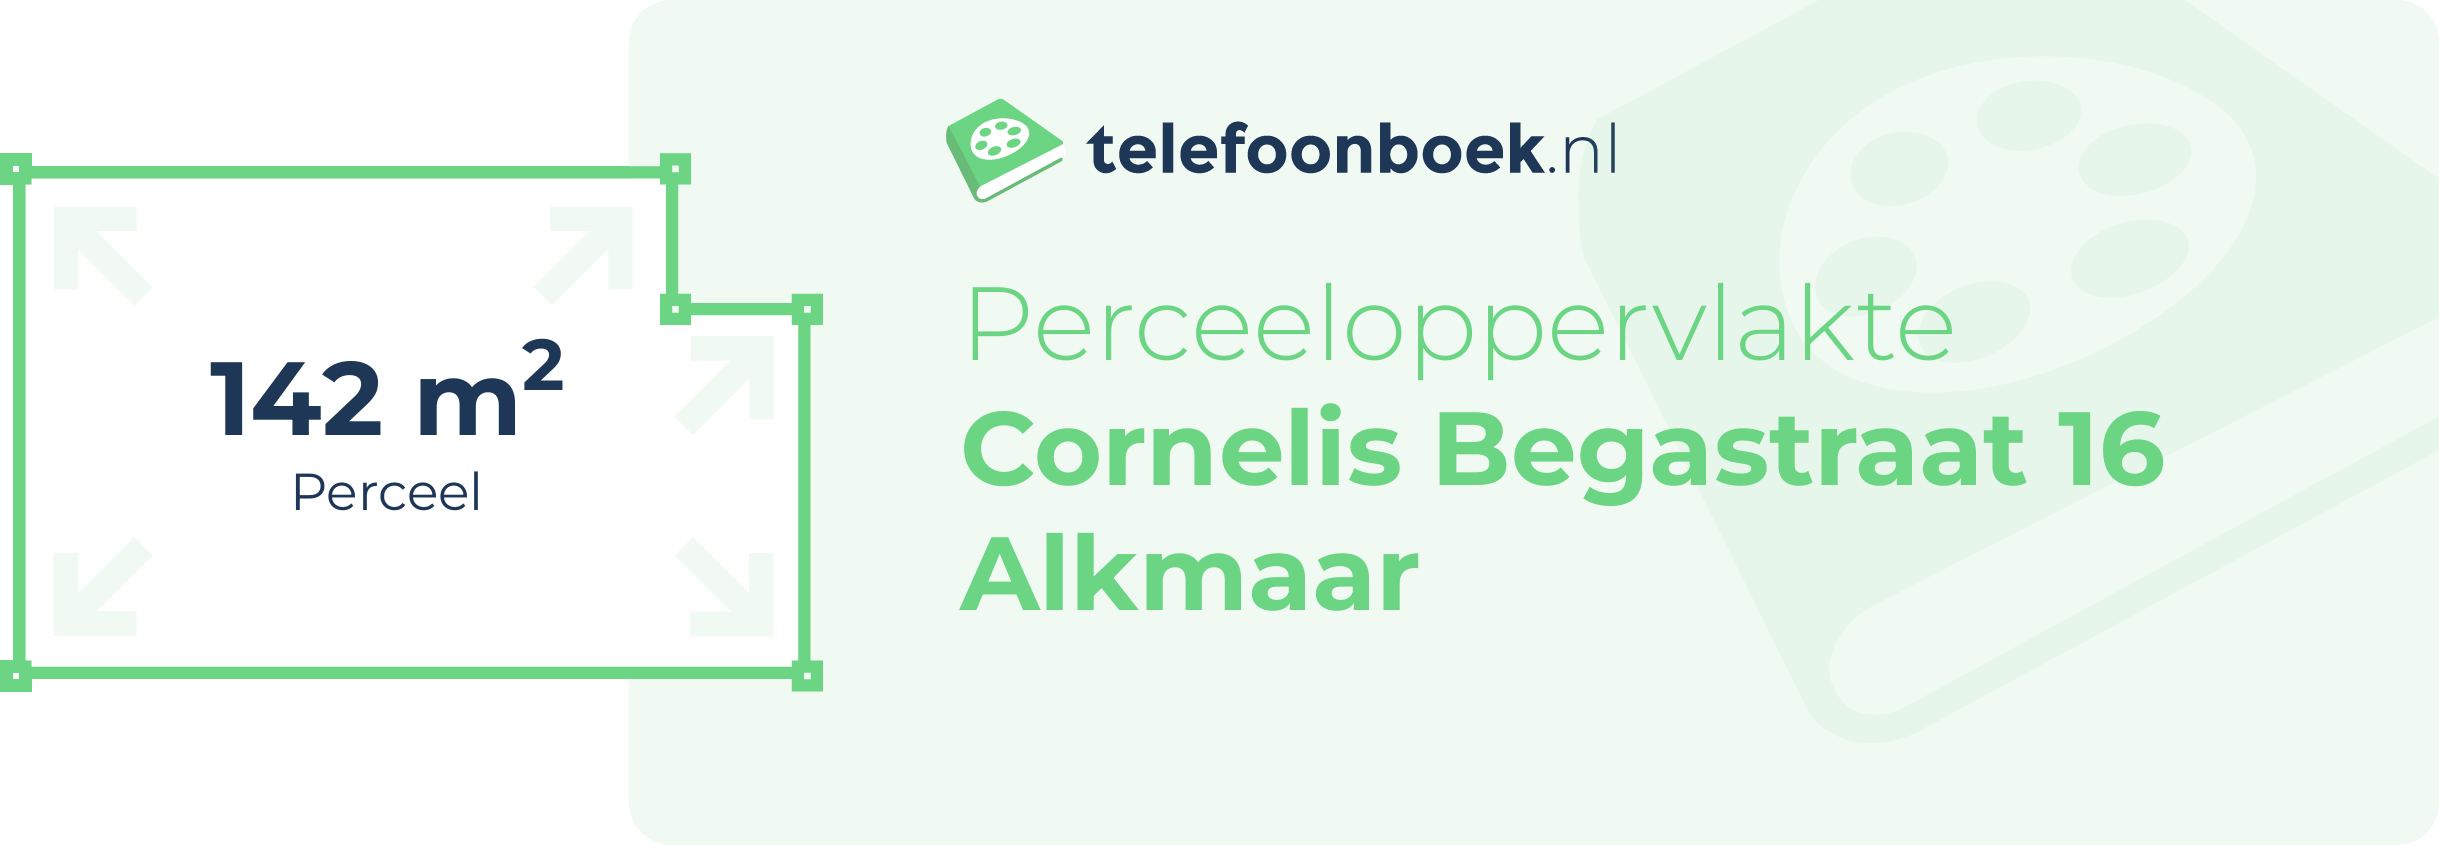 Perceeloppervlakte Cornelis Begastraat 16 Alkmaar